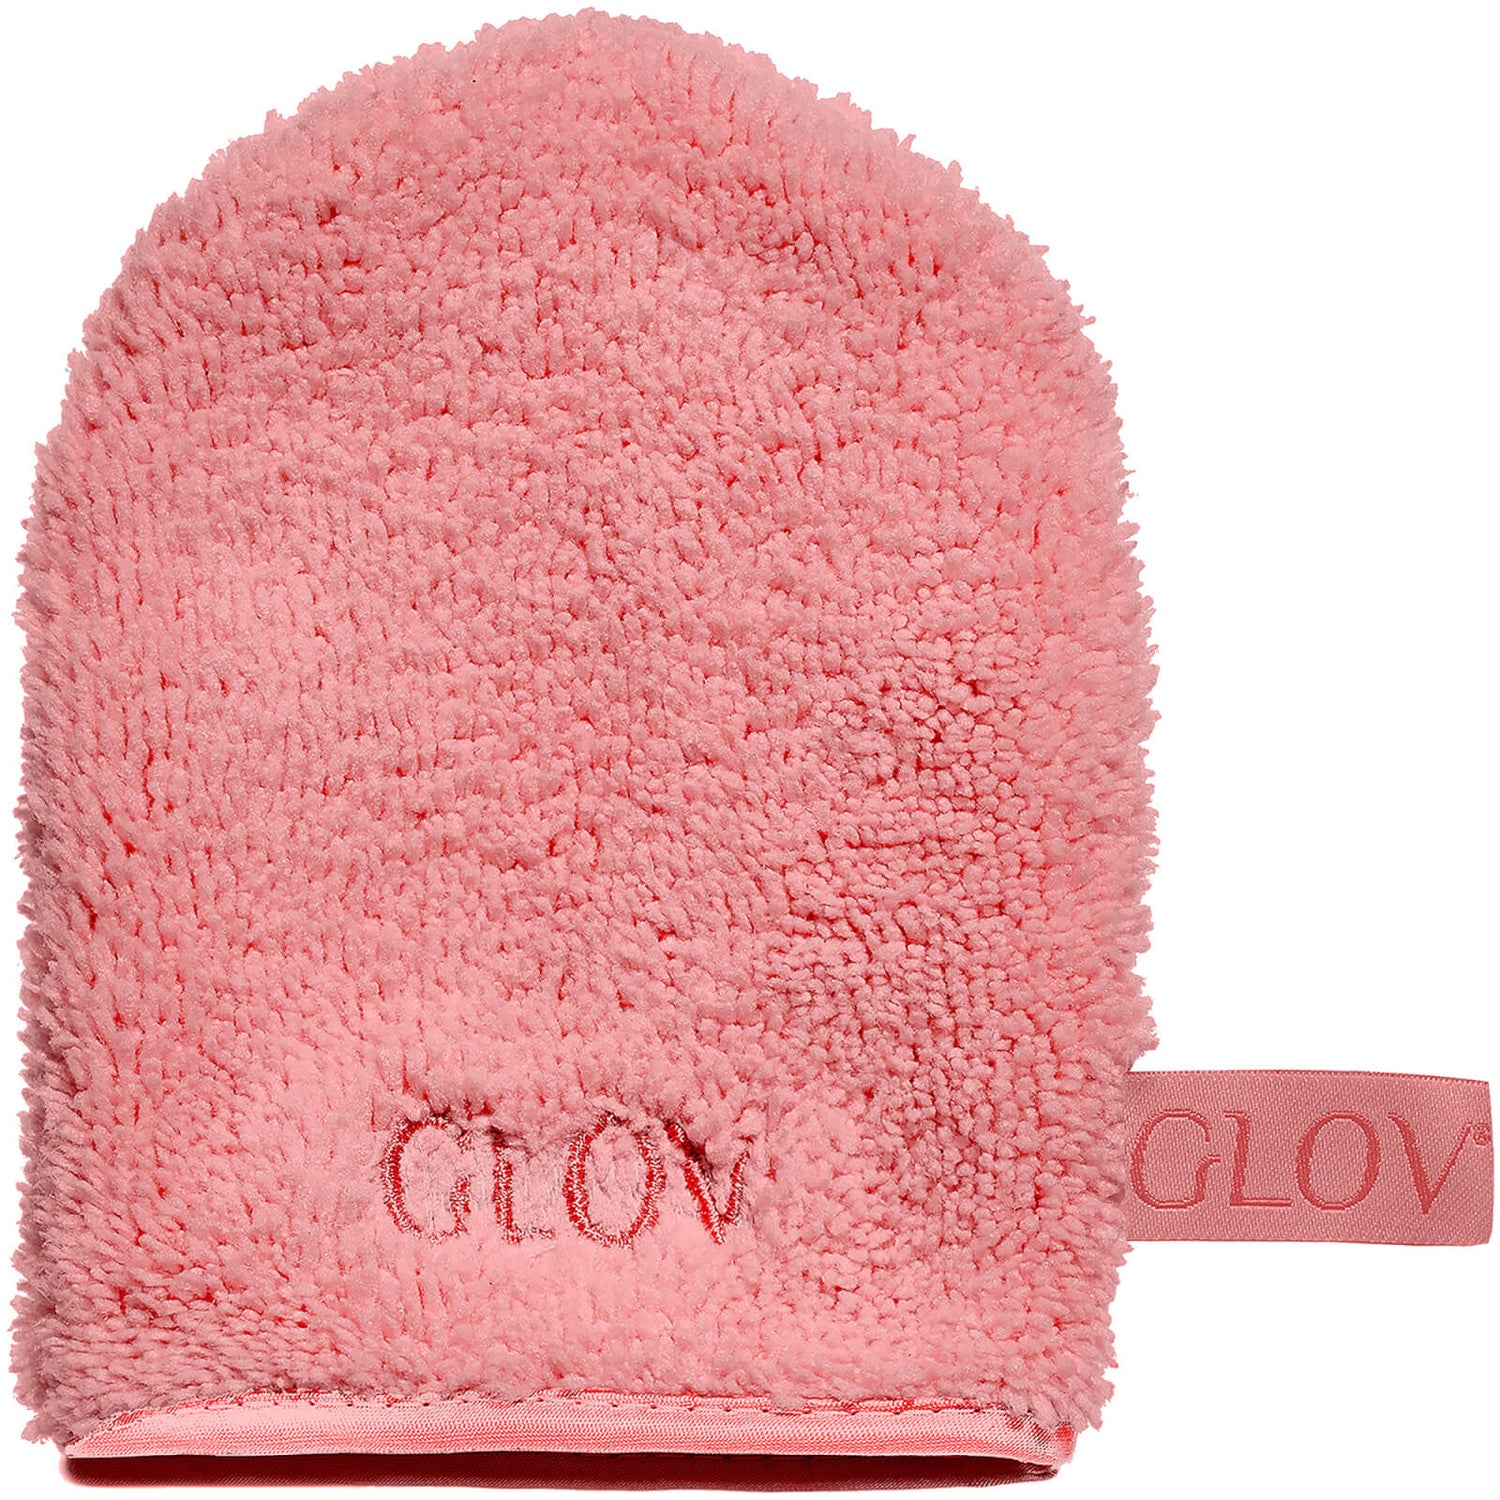 GLOV® 懒人清水卸妆巾 | 蜜桃粉